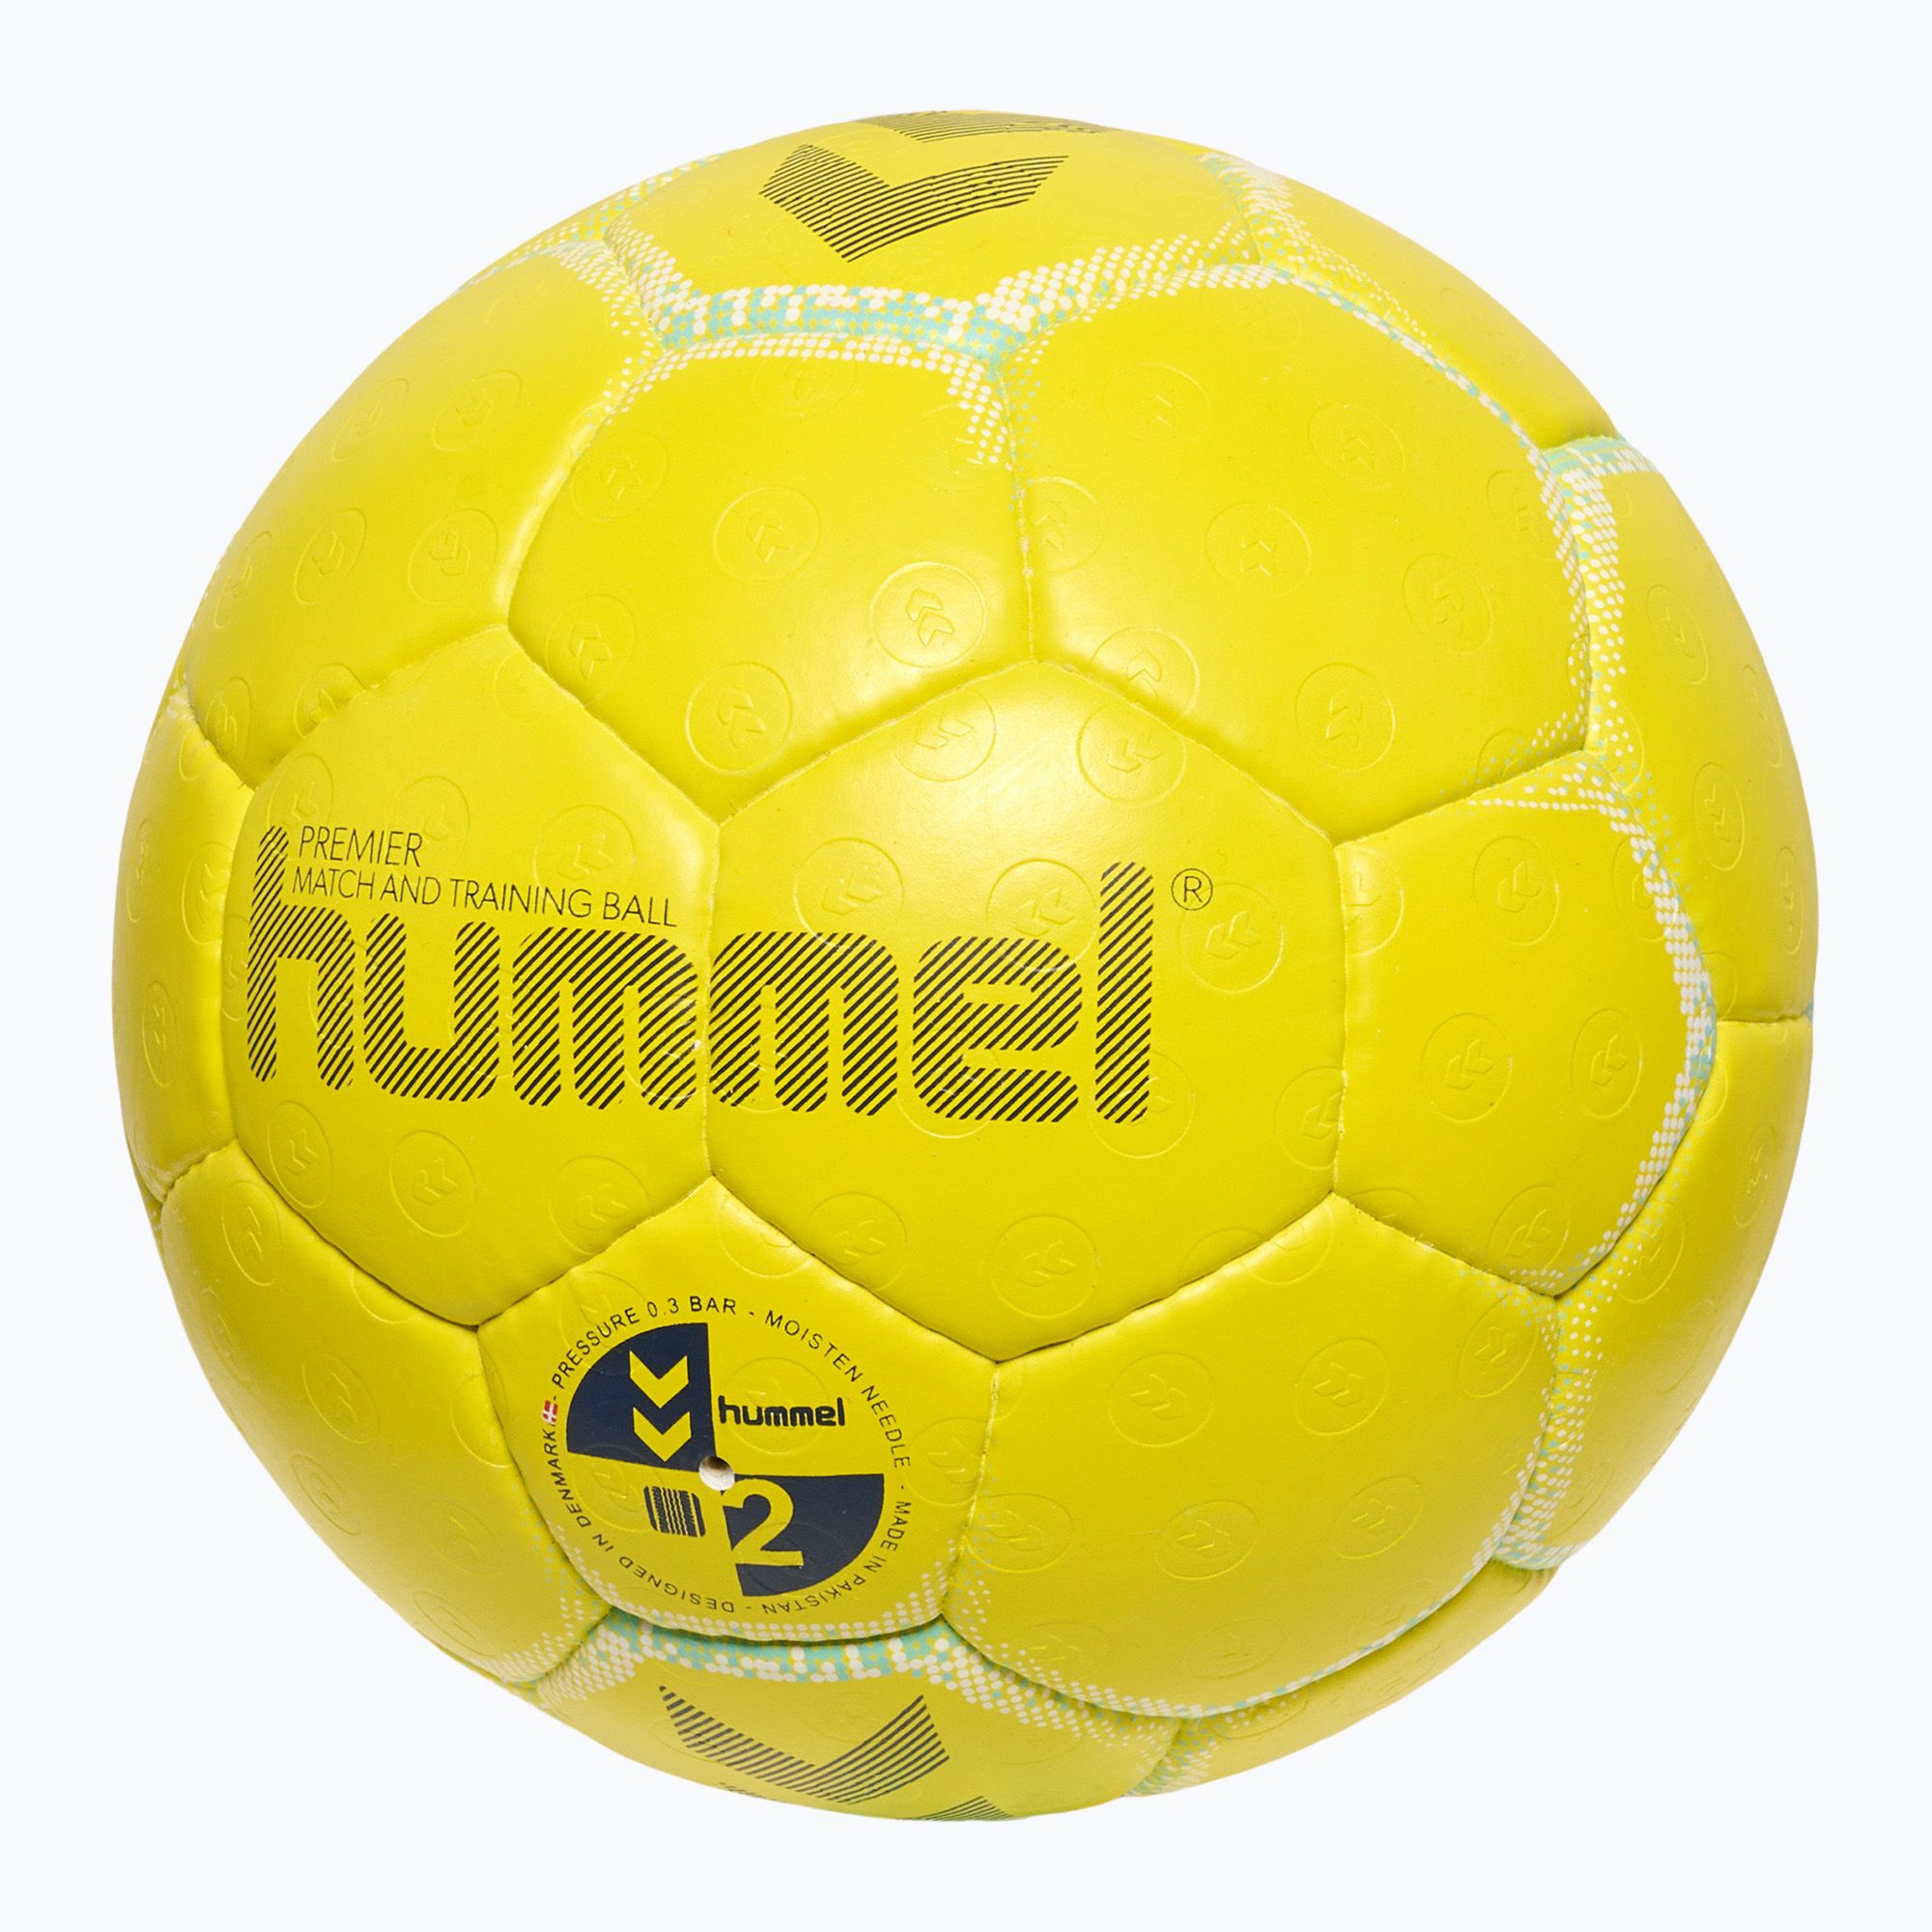 2 HB yellow/white/blue size Hummel handball Premier